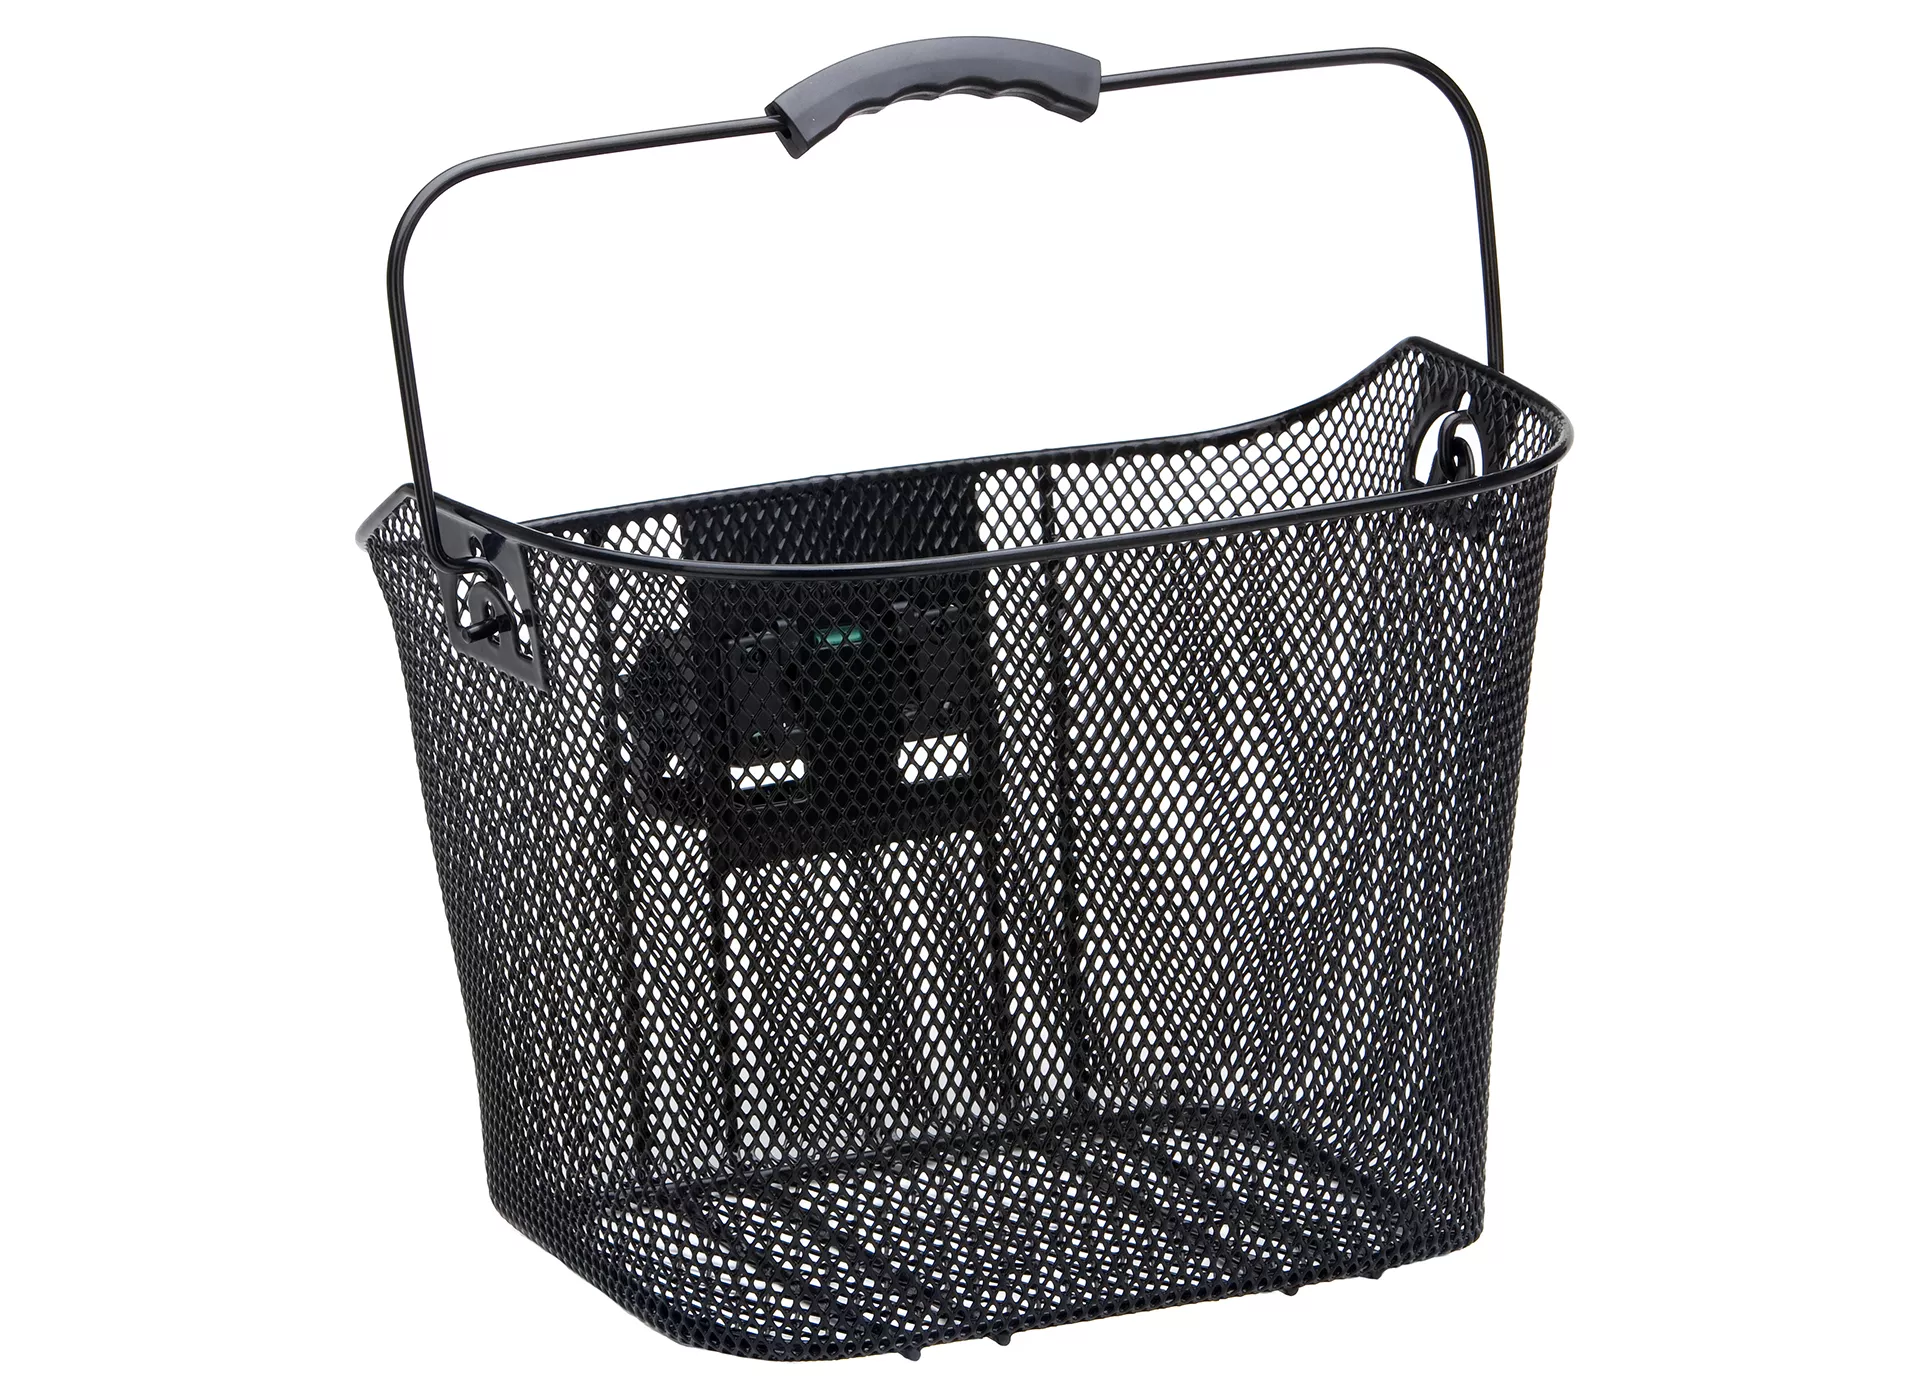 Wired basket